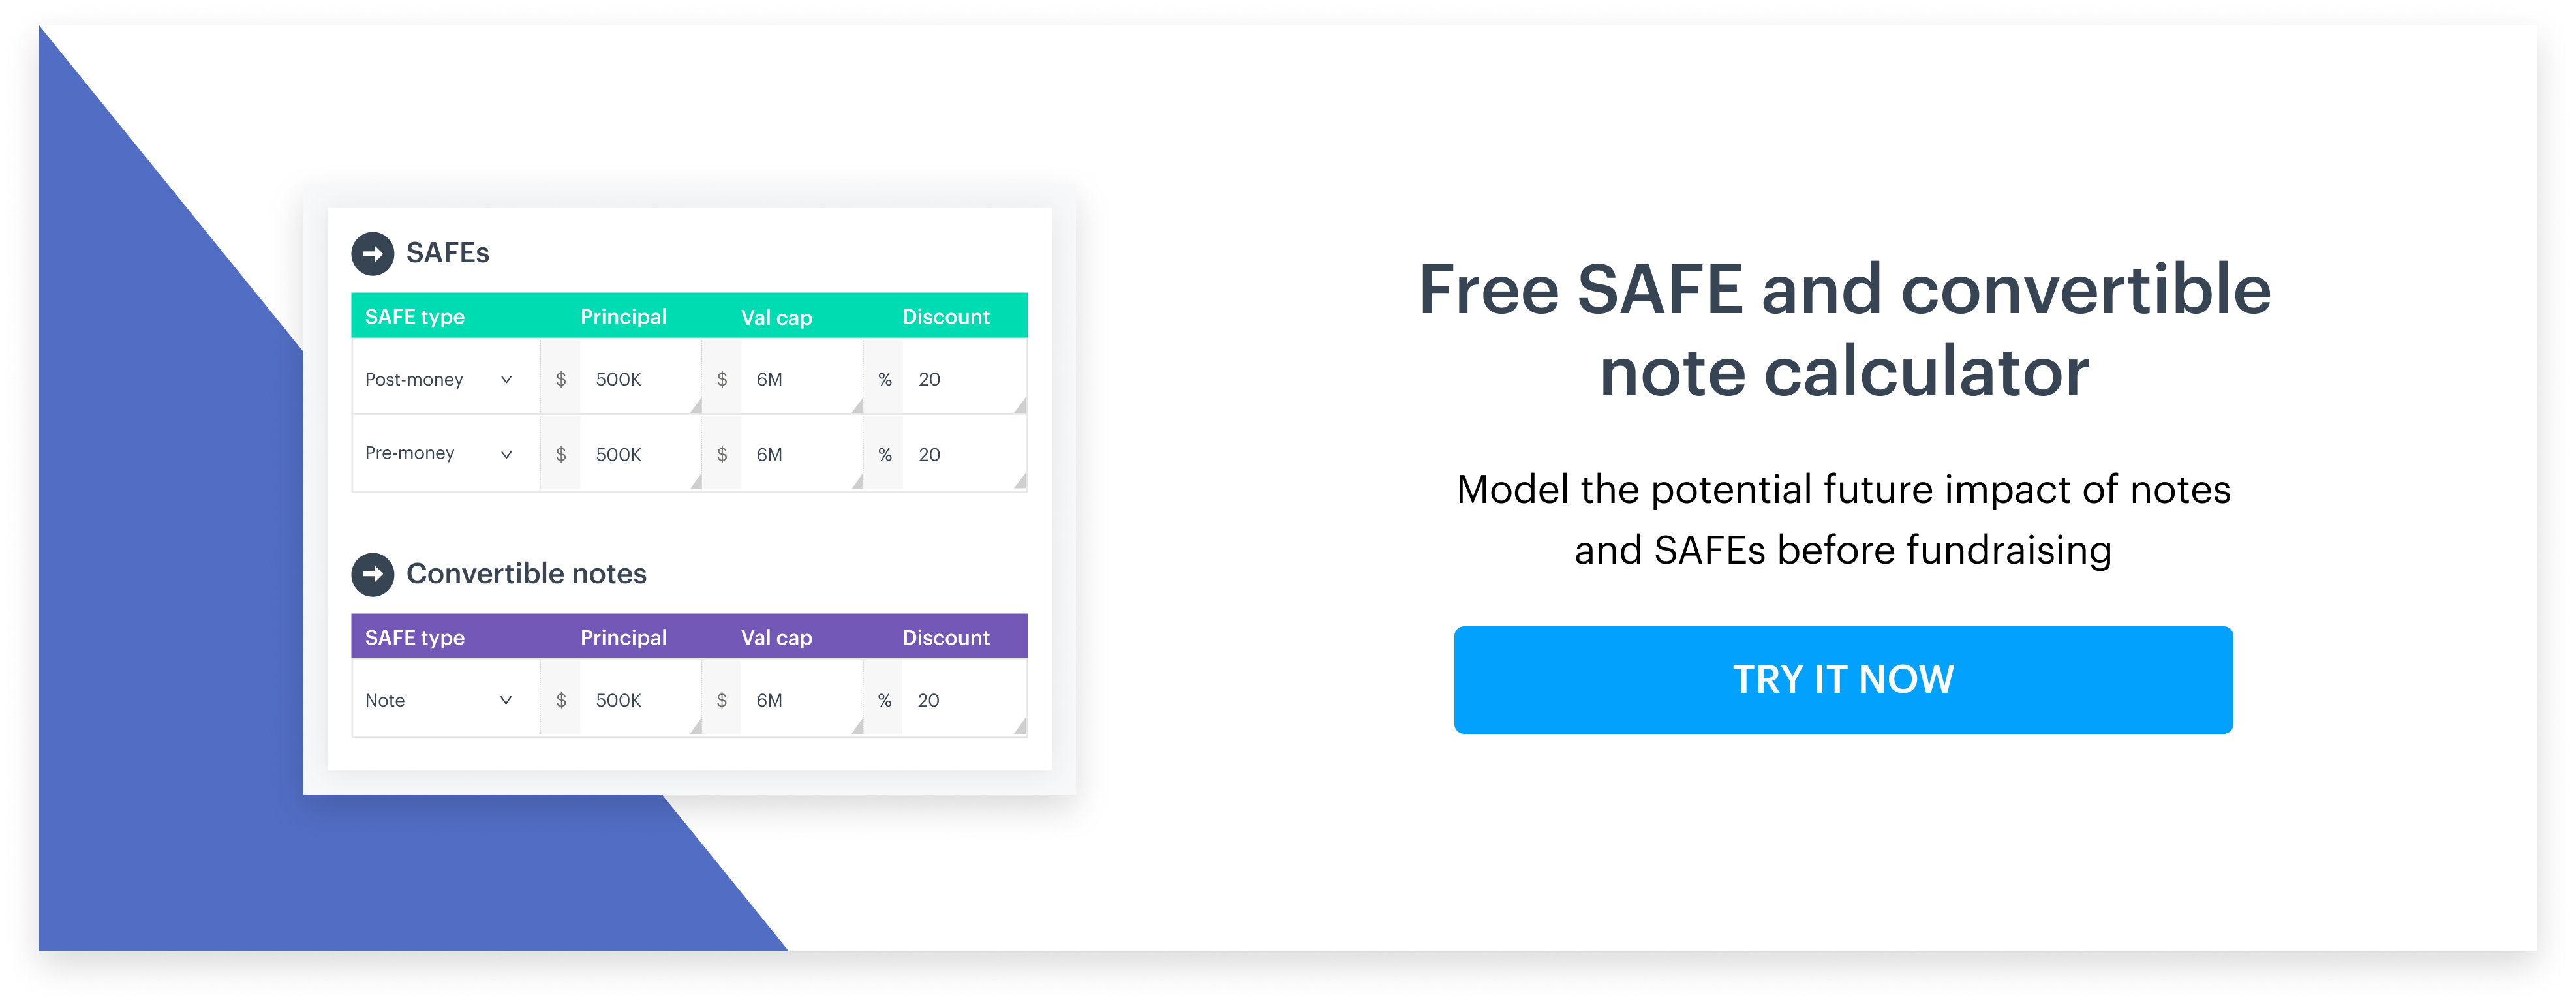 Introducing Carta’s SAFE and convertible note calculator